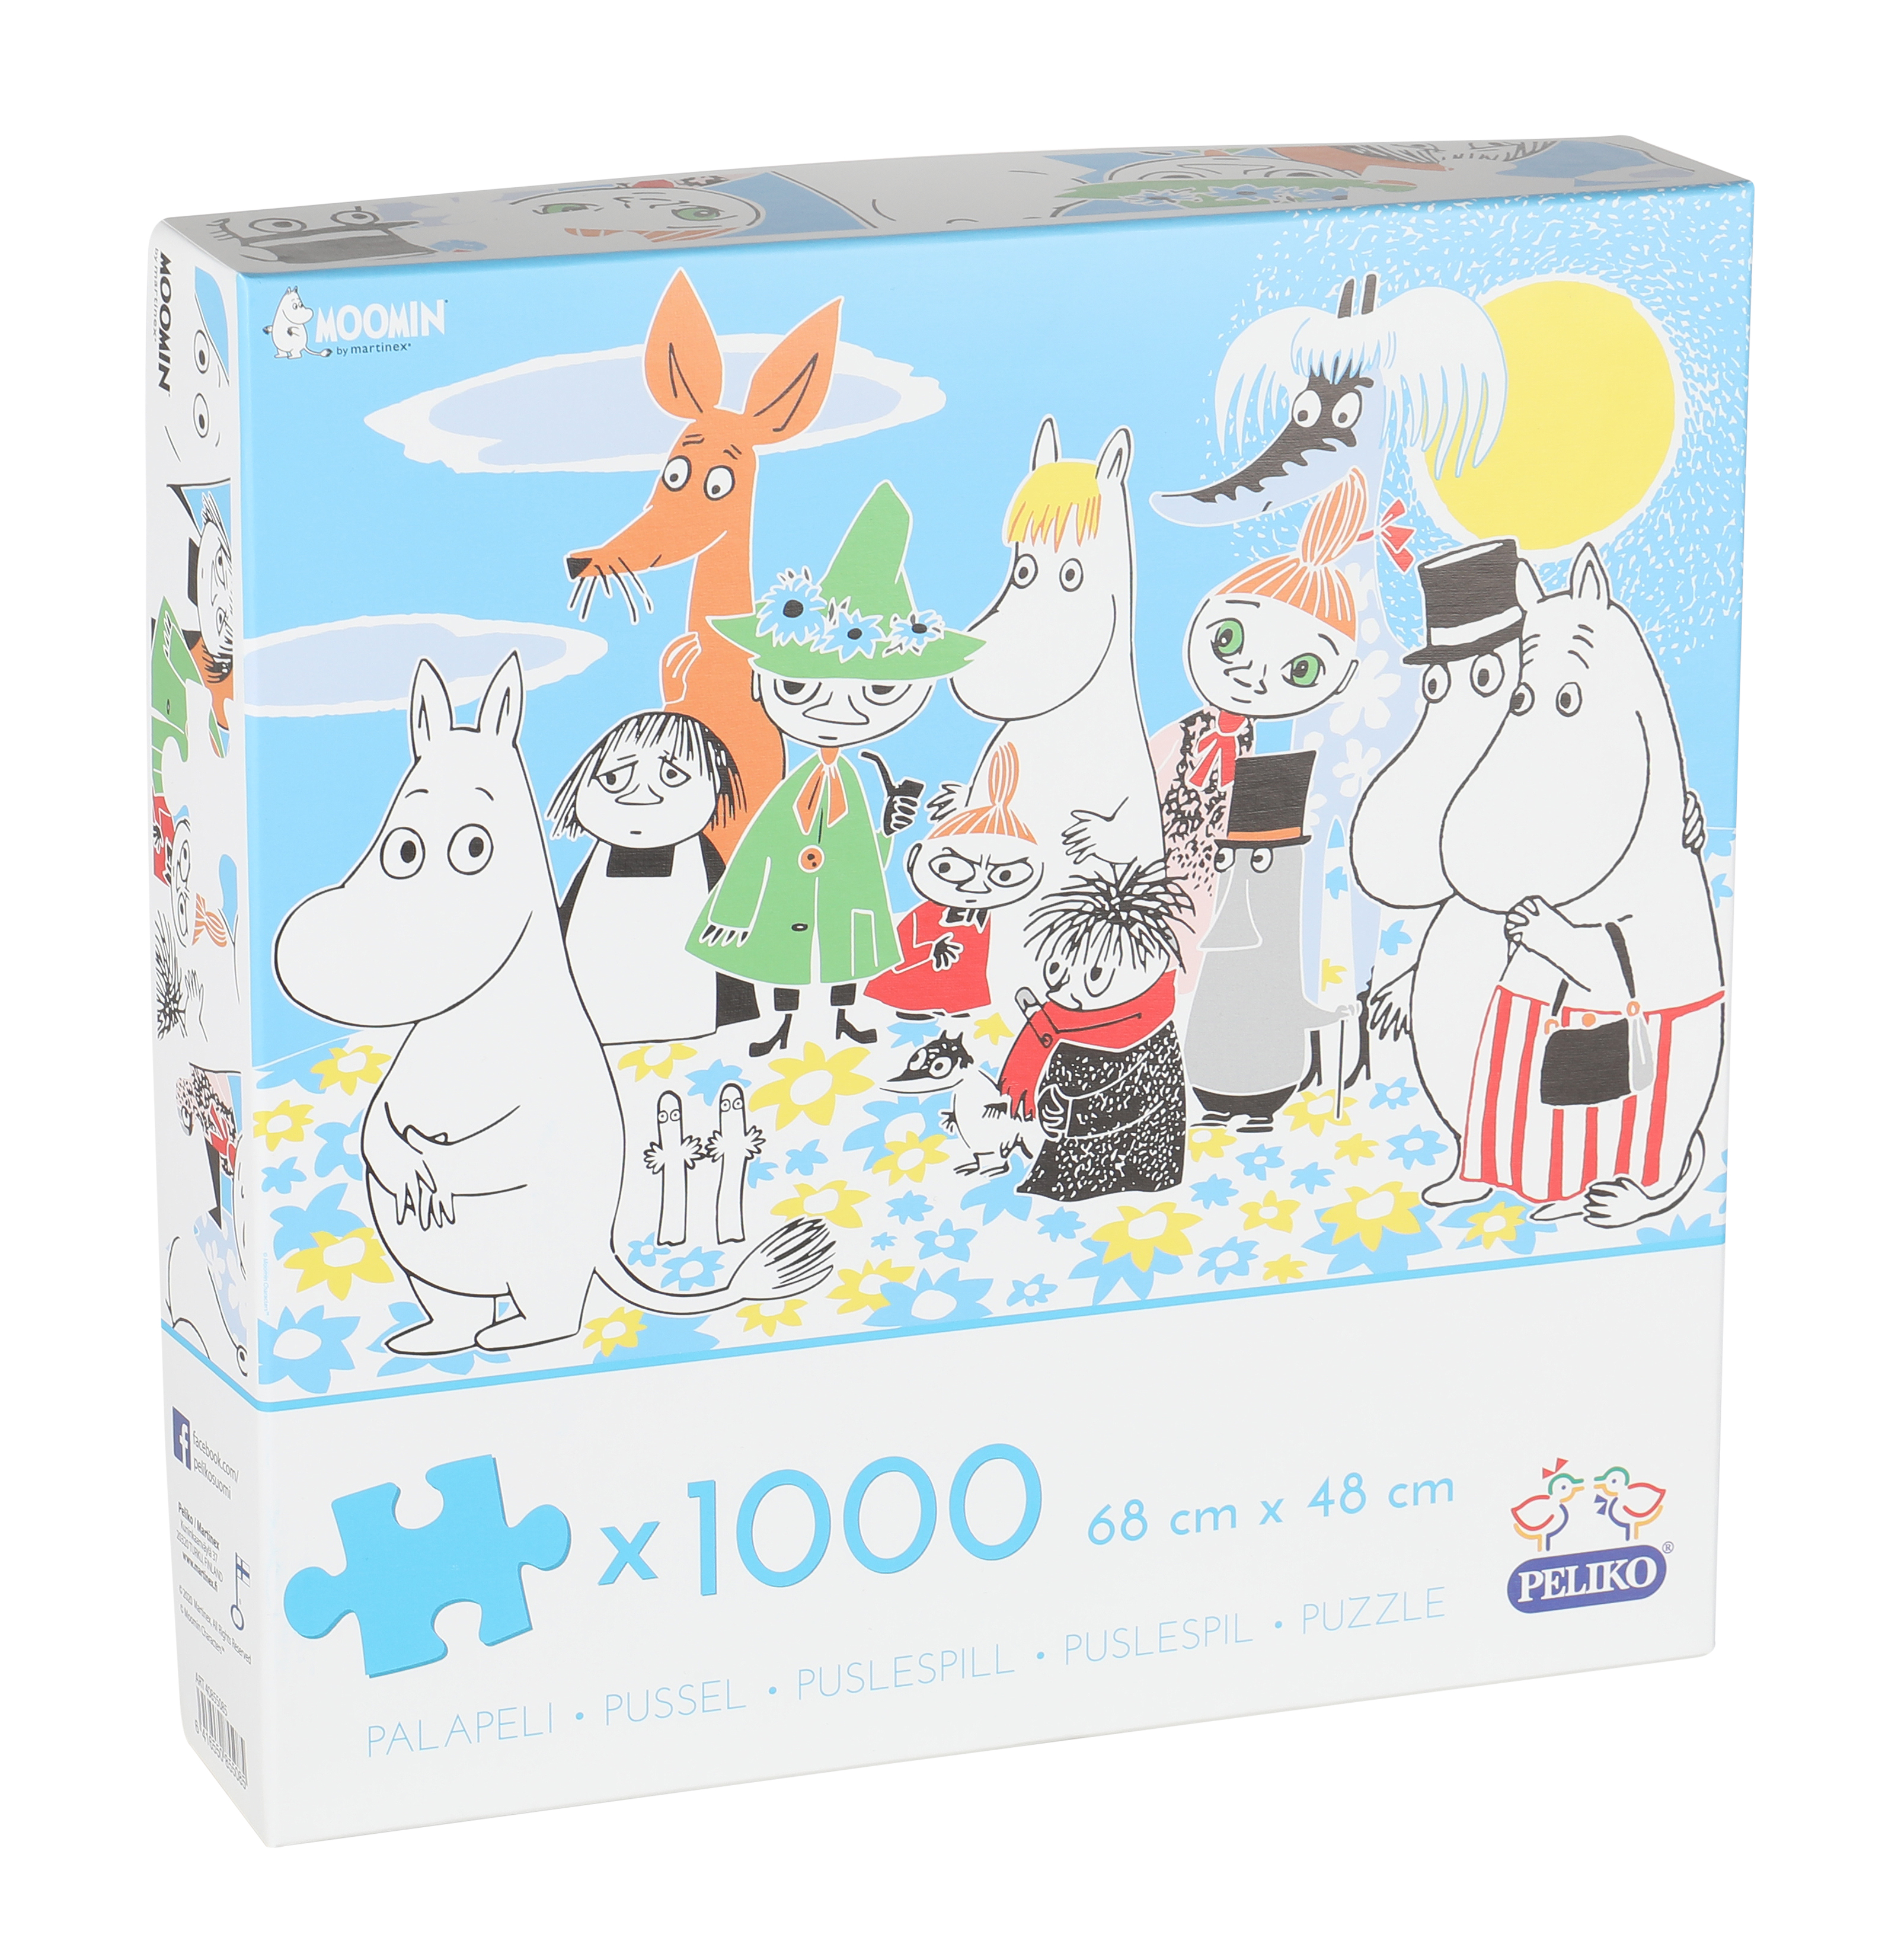 Martinex Moomin Jigsaw Puzzle 1000 Pieces